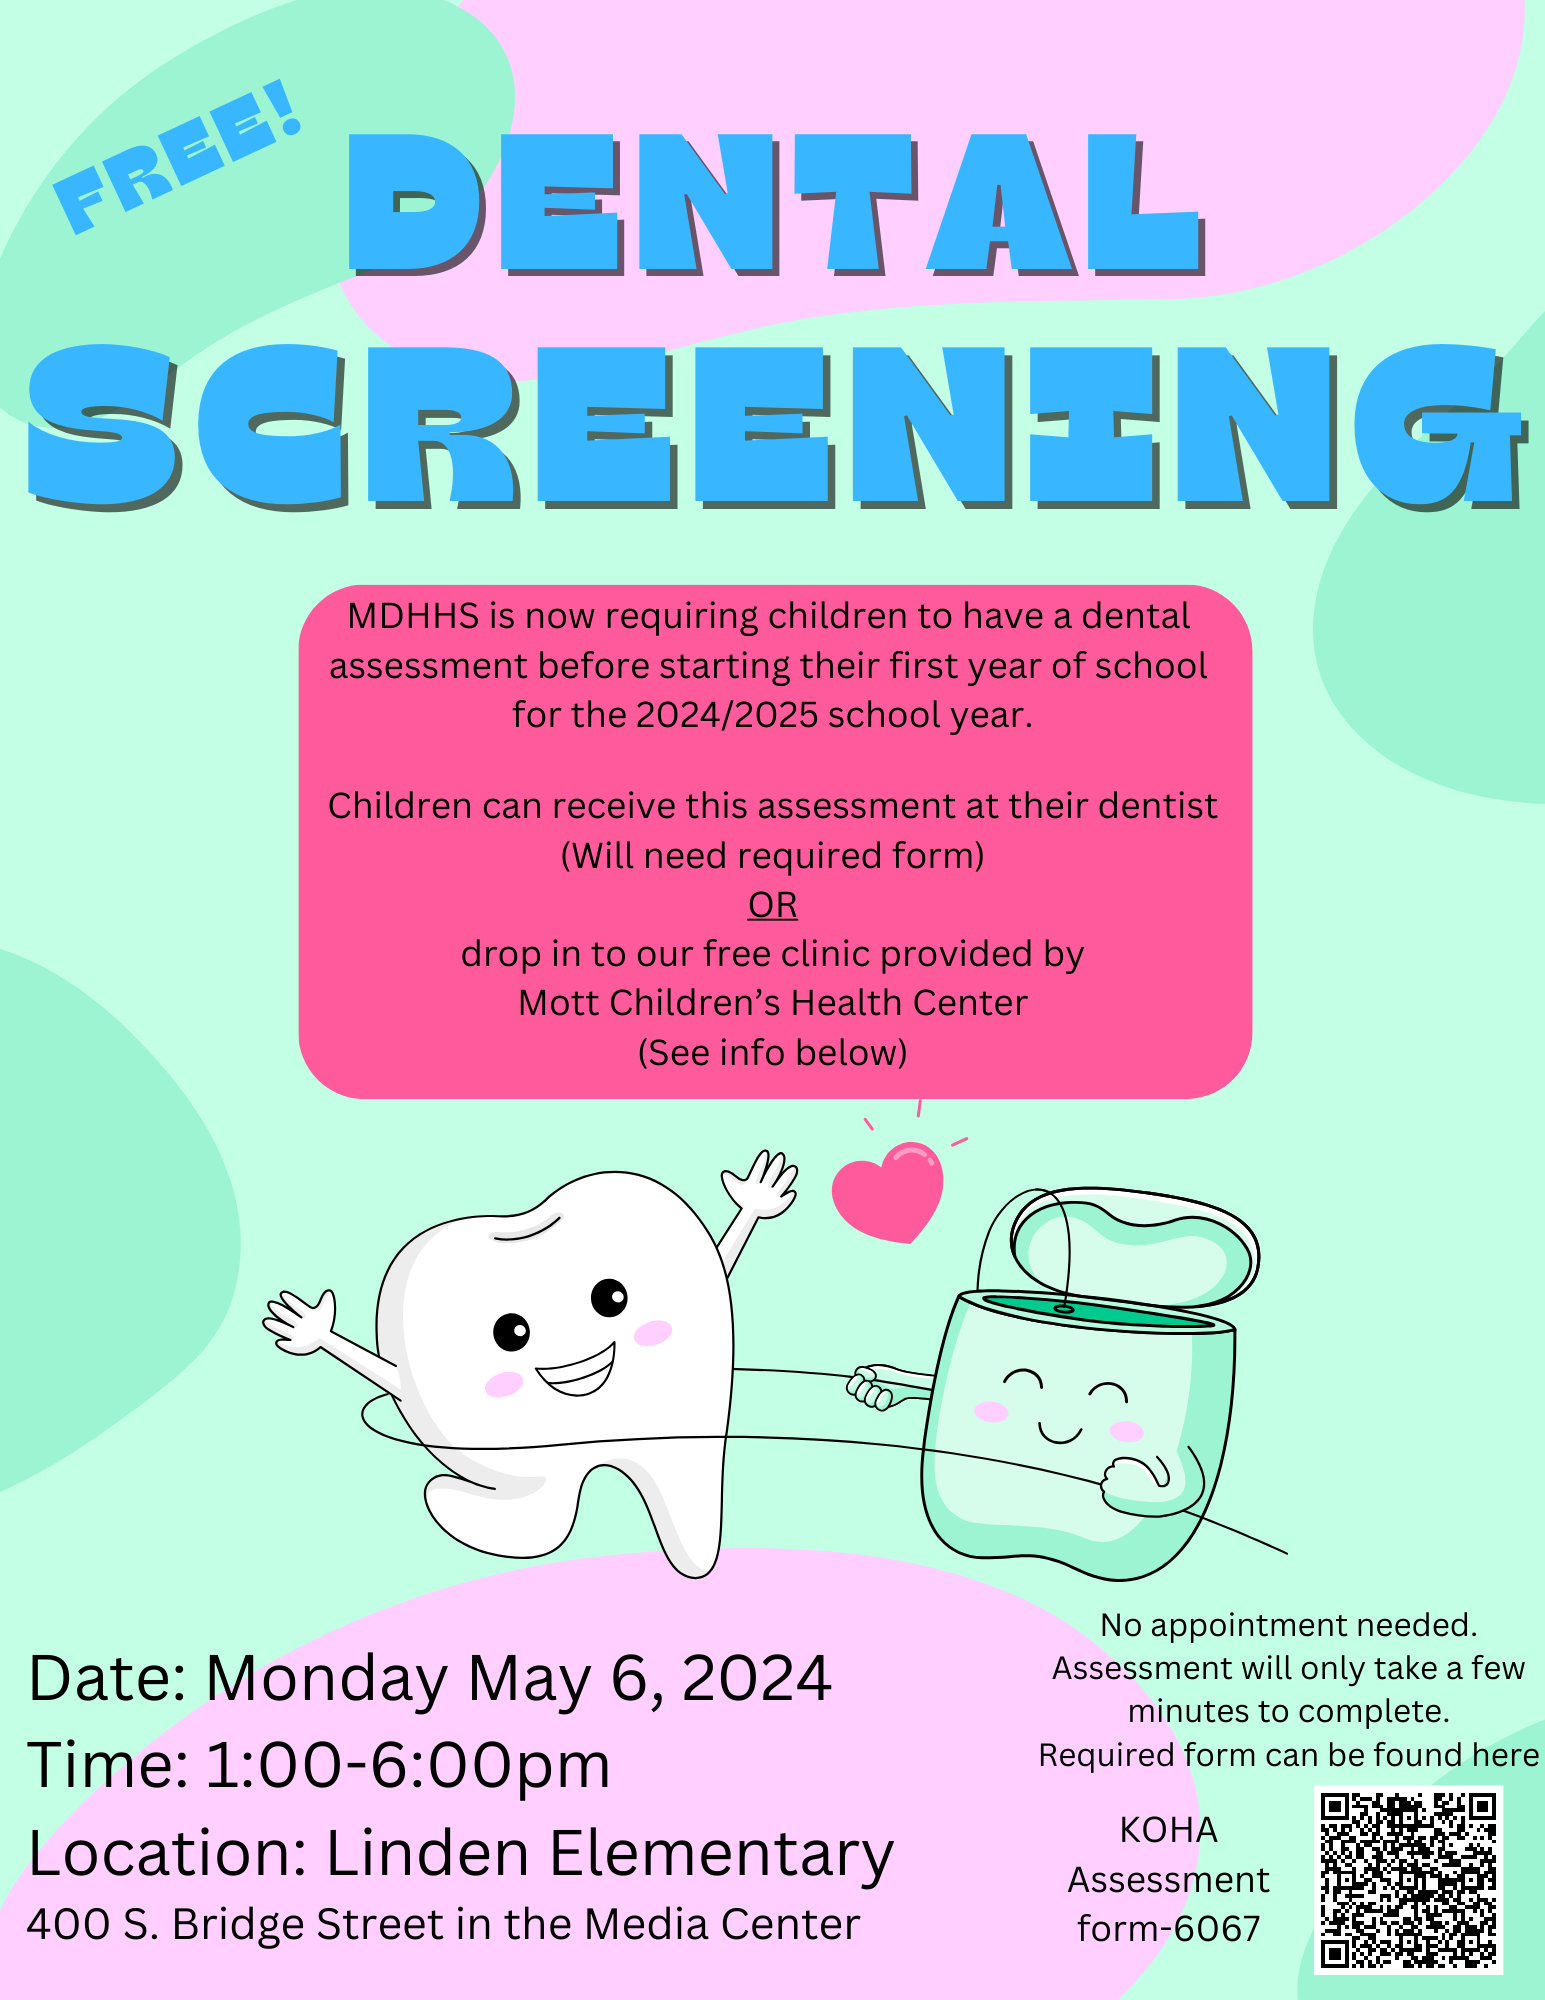 Free Dental Screening May 6, 2024 1-6 pm LInden Elementary